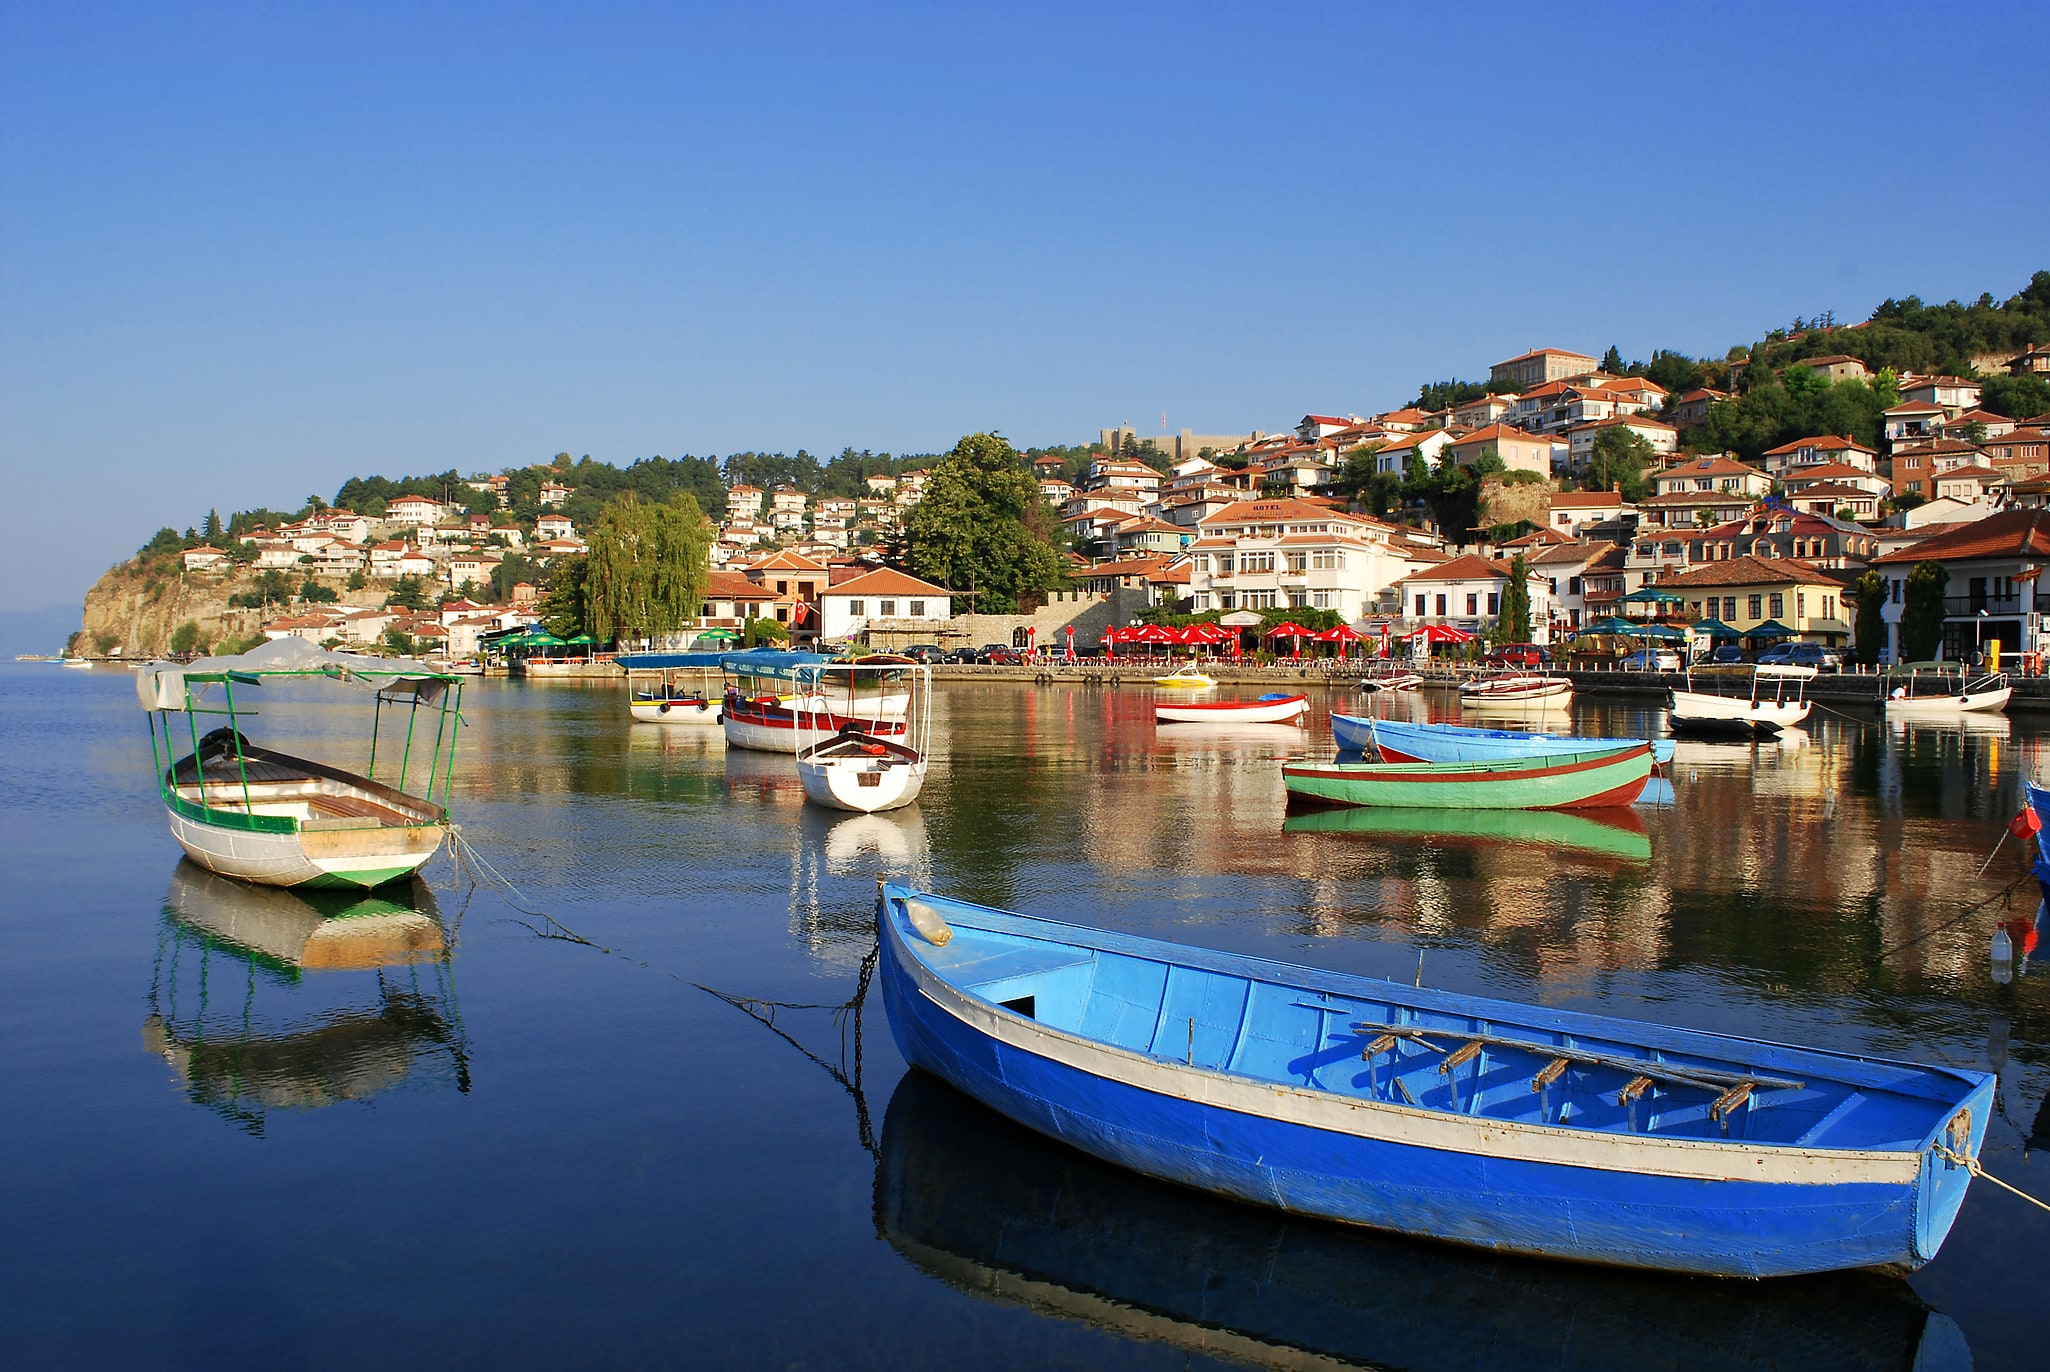 Ohrid, North Macedonia